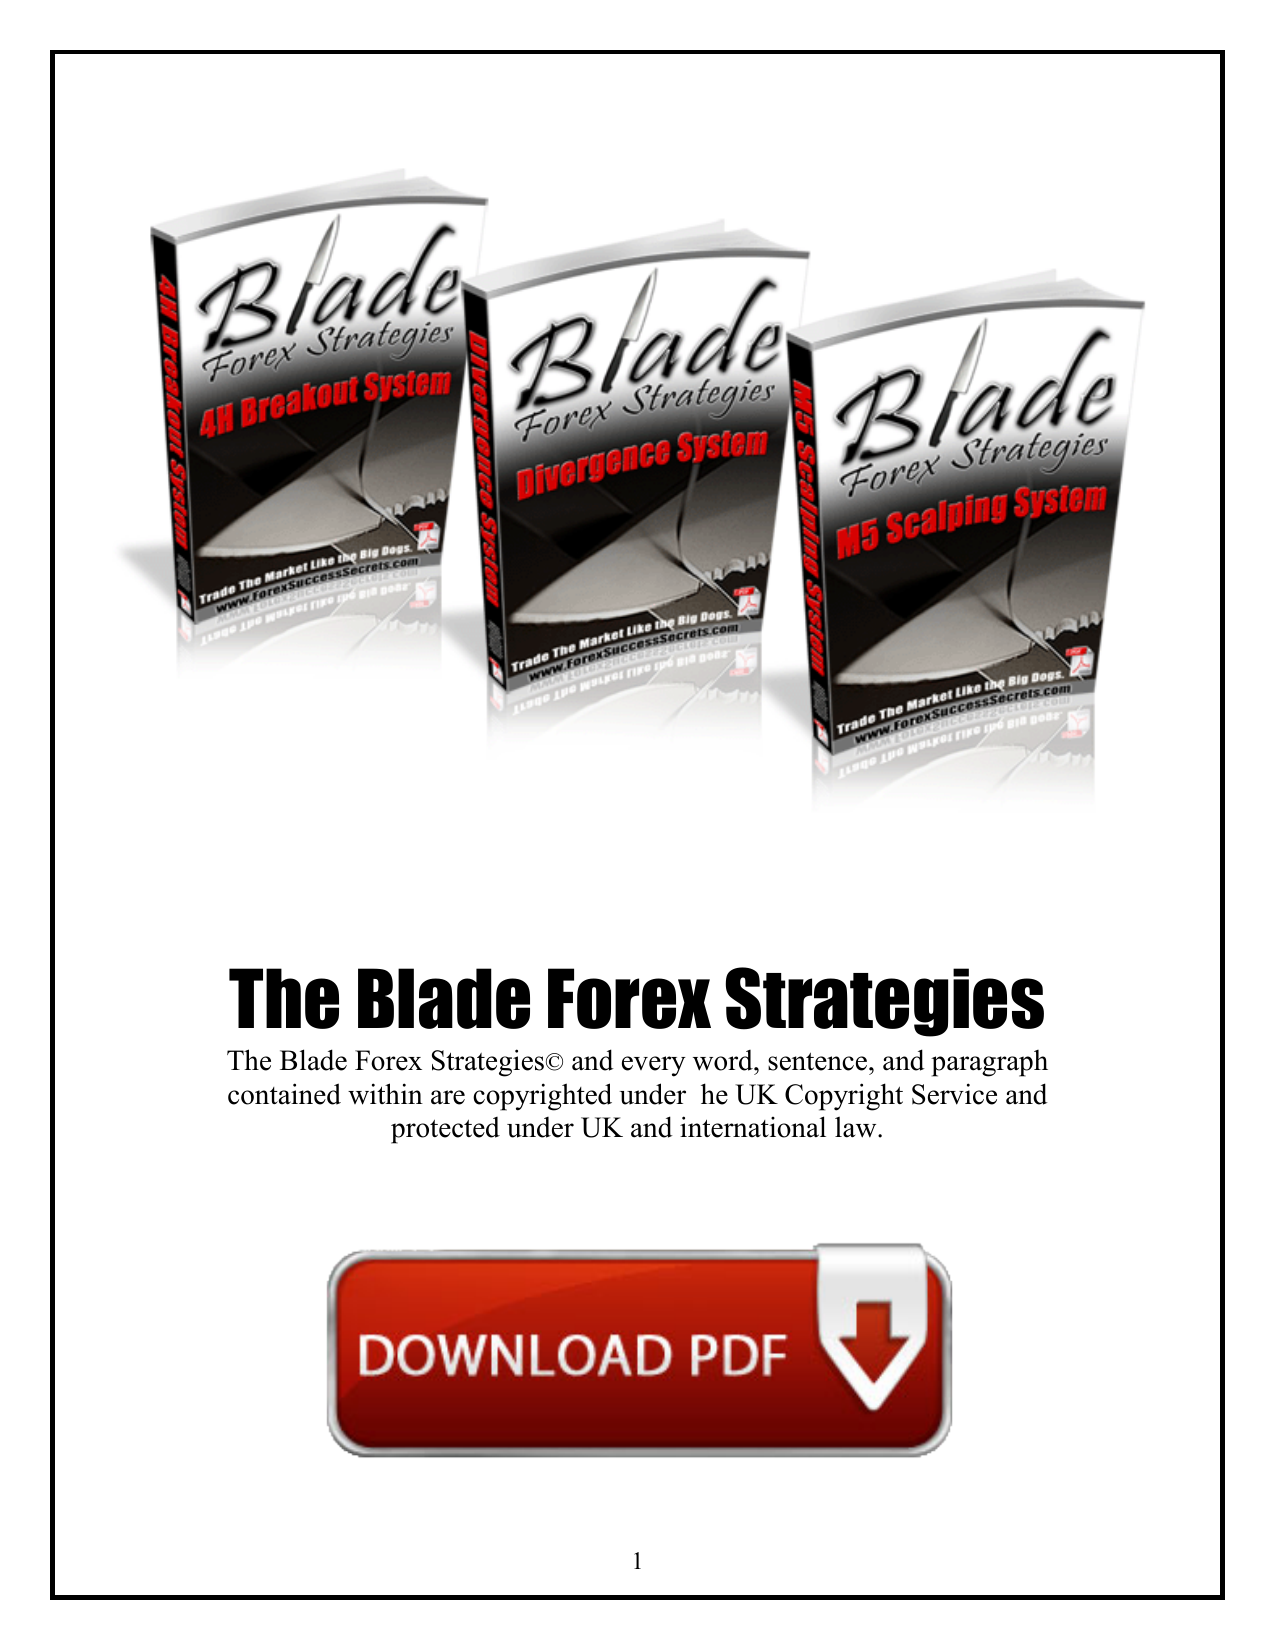 forex strategies pdf download